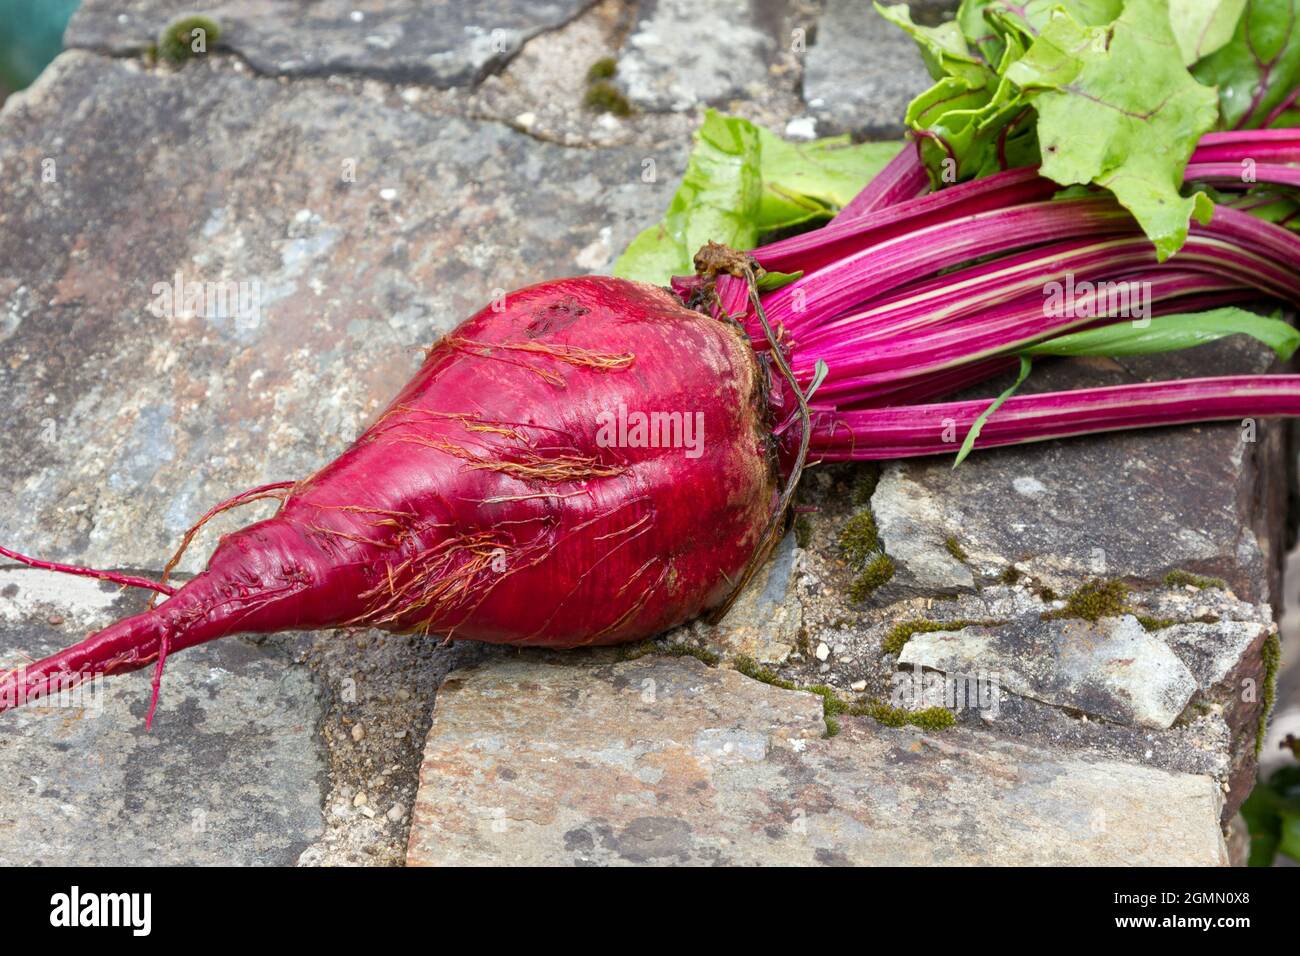 Large freshly harvested beetroot Stock Photo